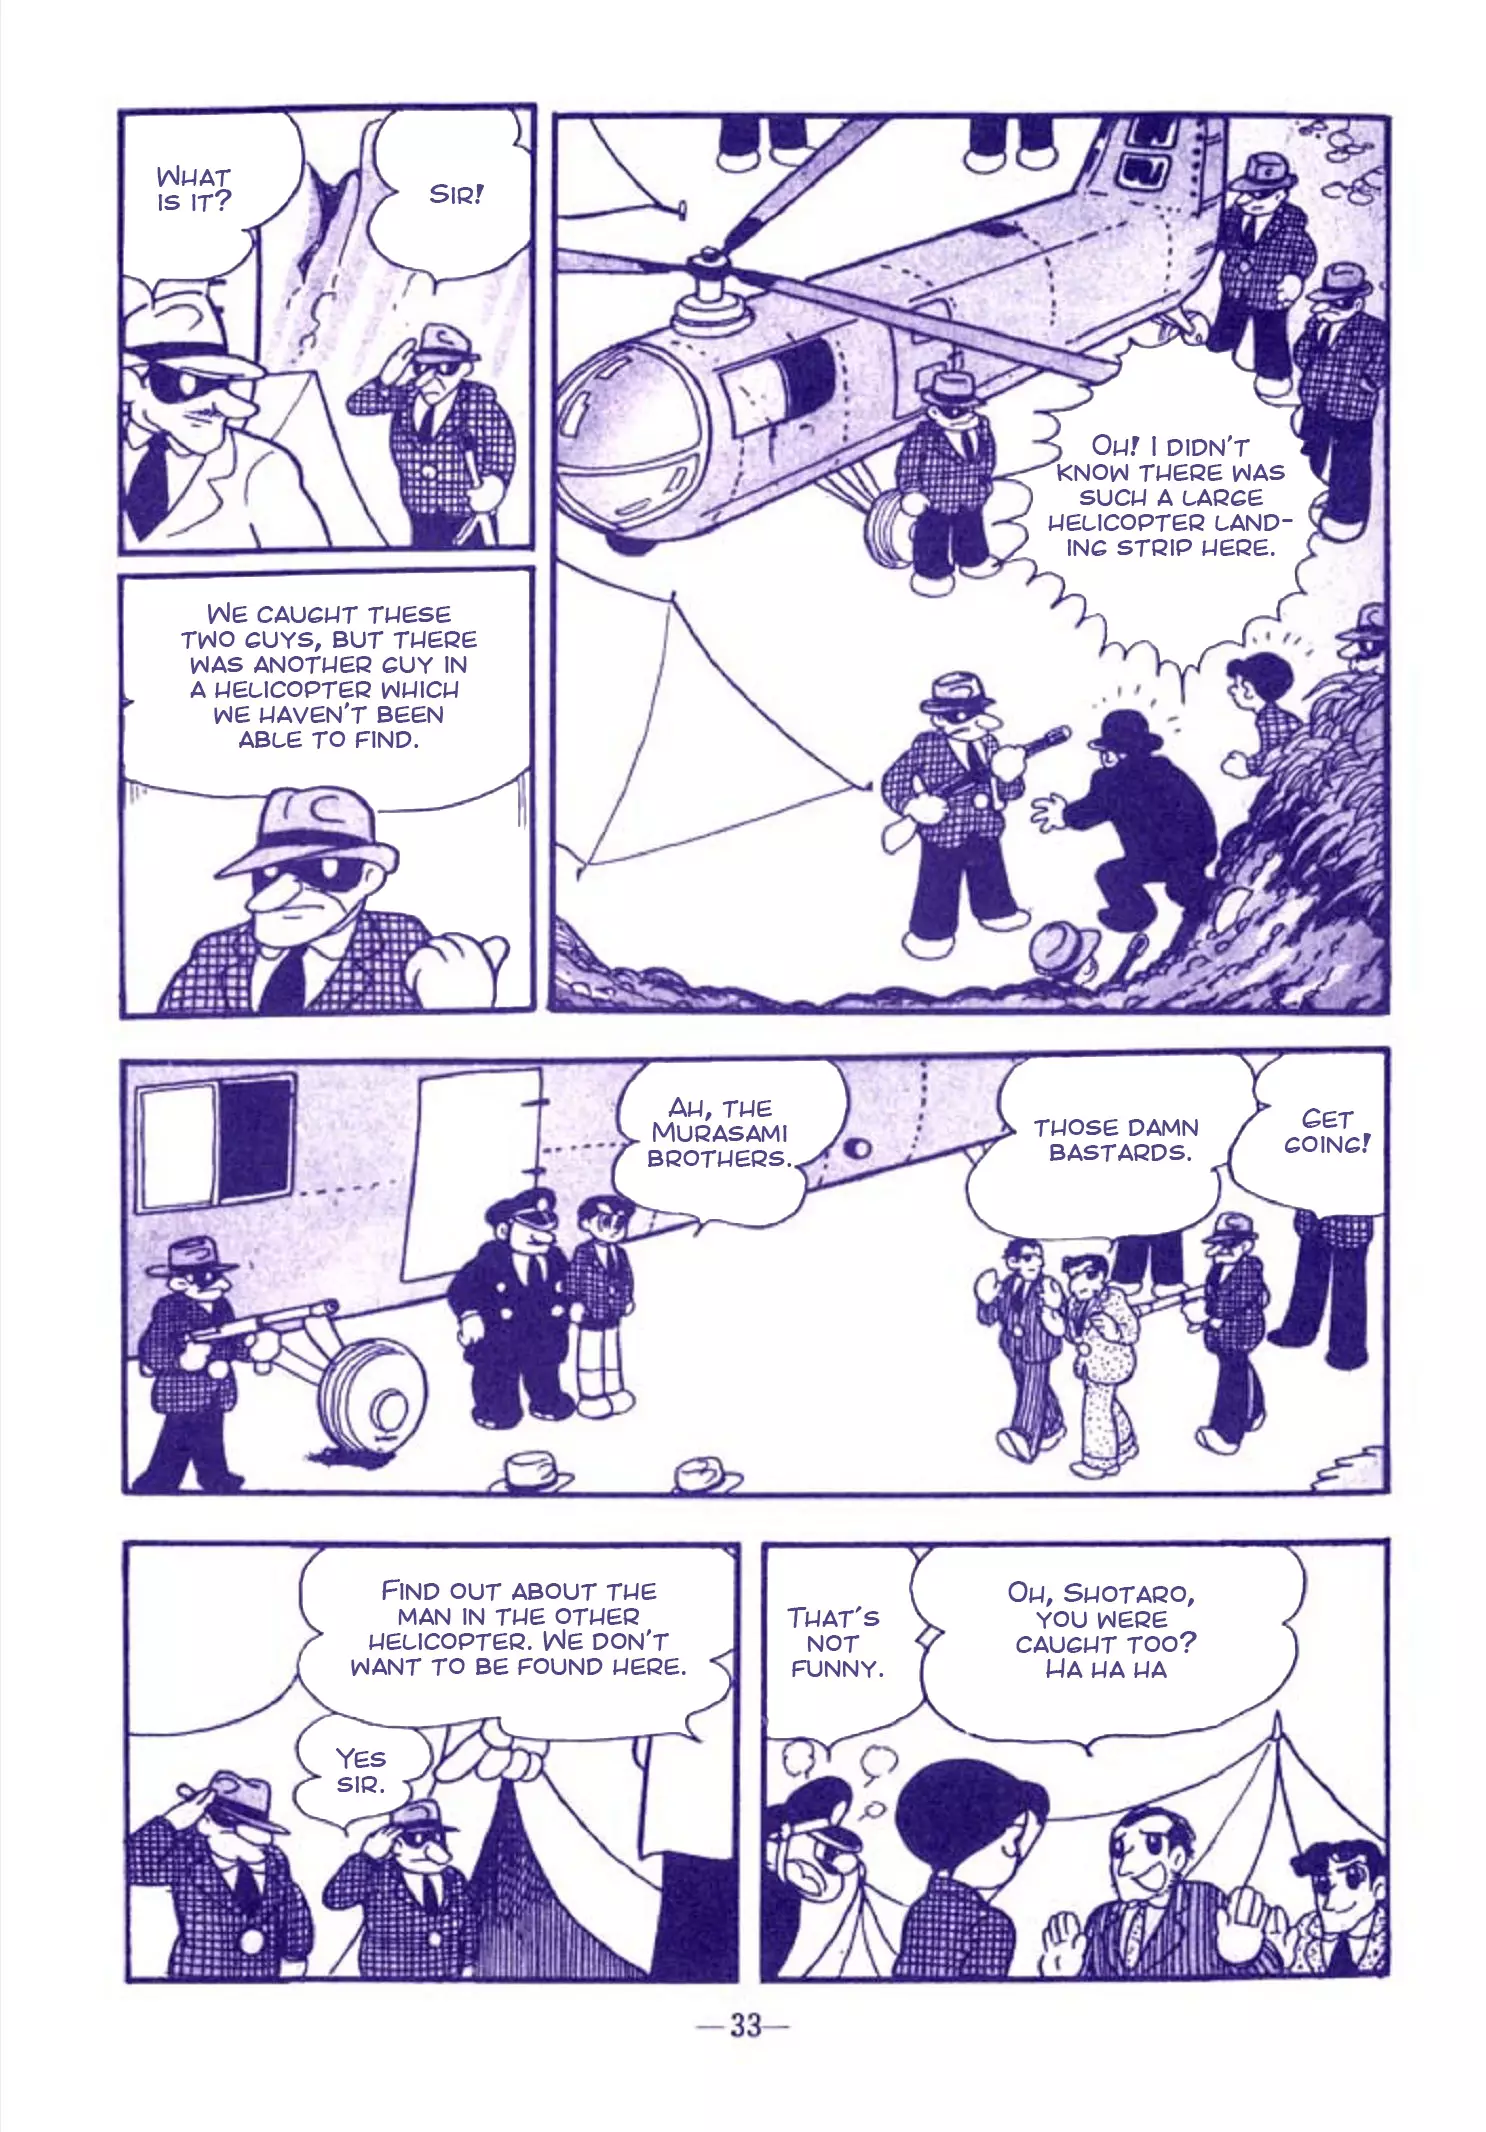 Tetsujin No. 28 Full Length Detective Manga - 1 page 36-9e9bea4e